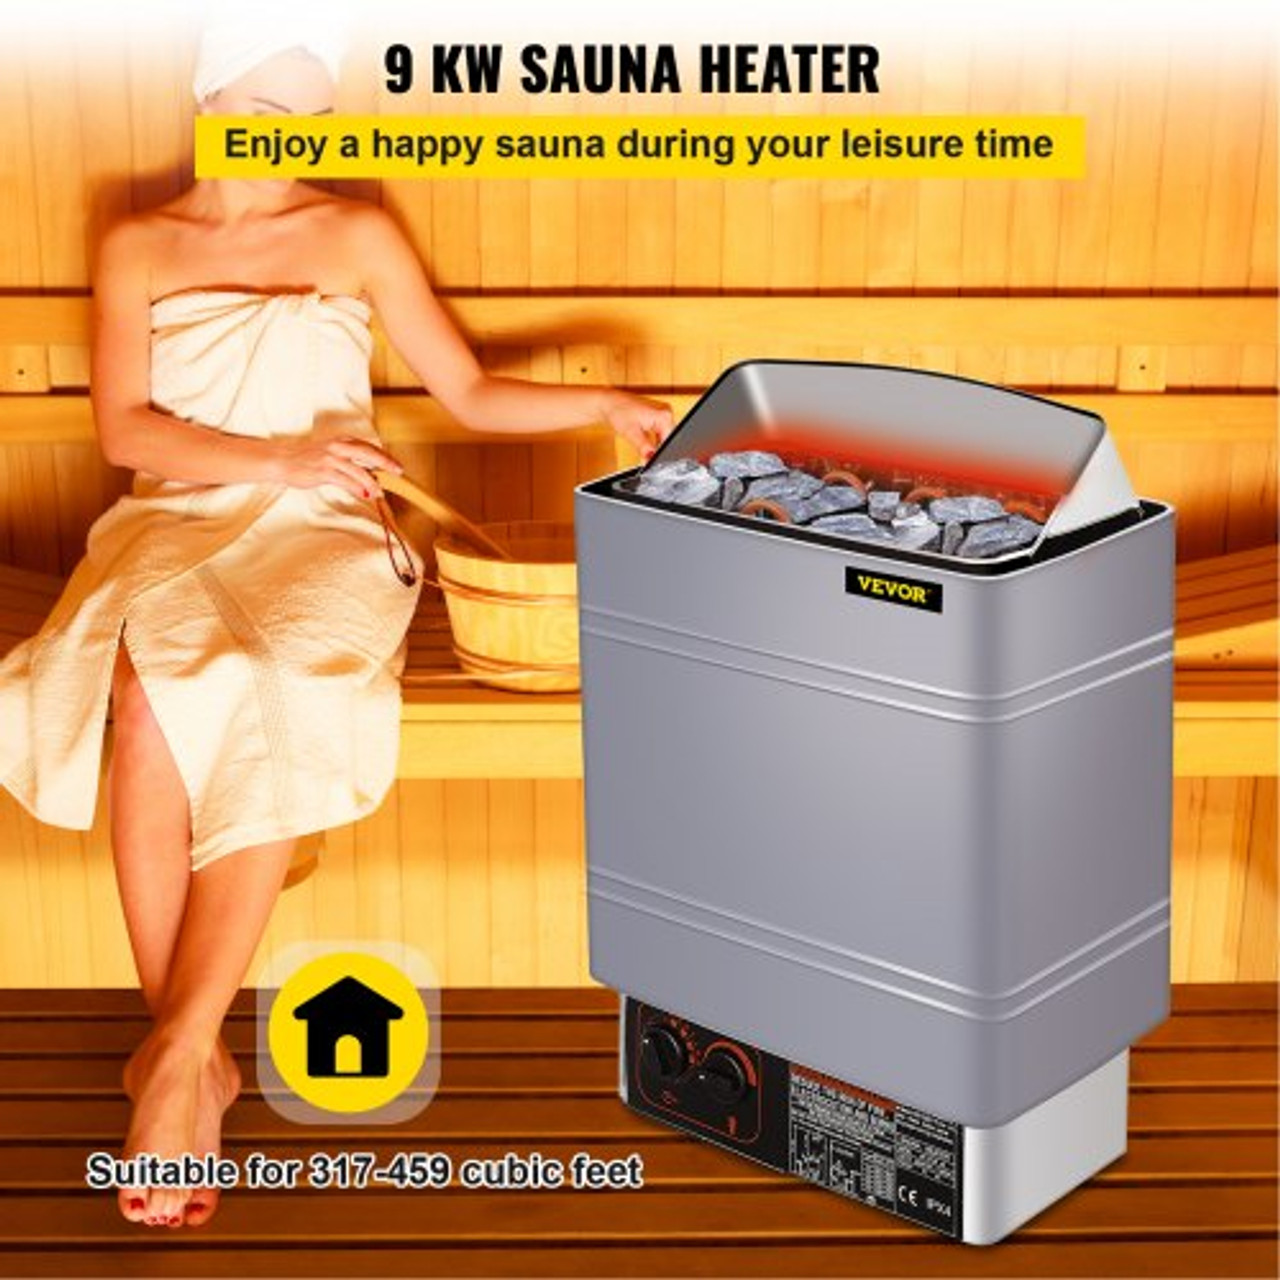 Sauna Heater 9KW Dry Steam Bath Sauna Heater Stove 220V-240V with Internal Controller Electric Sauna Stove for Max.459 Cubic Feet Home Hotel Sauna Room Spa Shower Bath Sauna